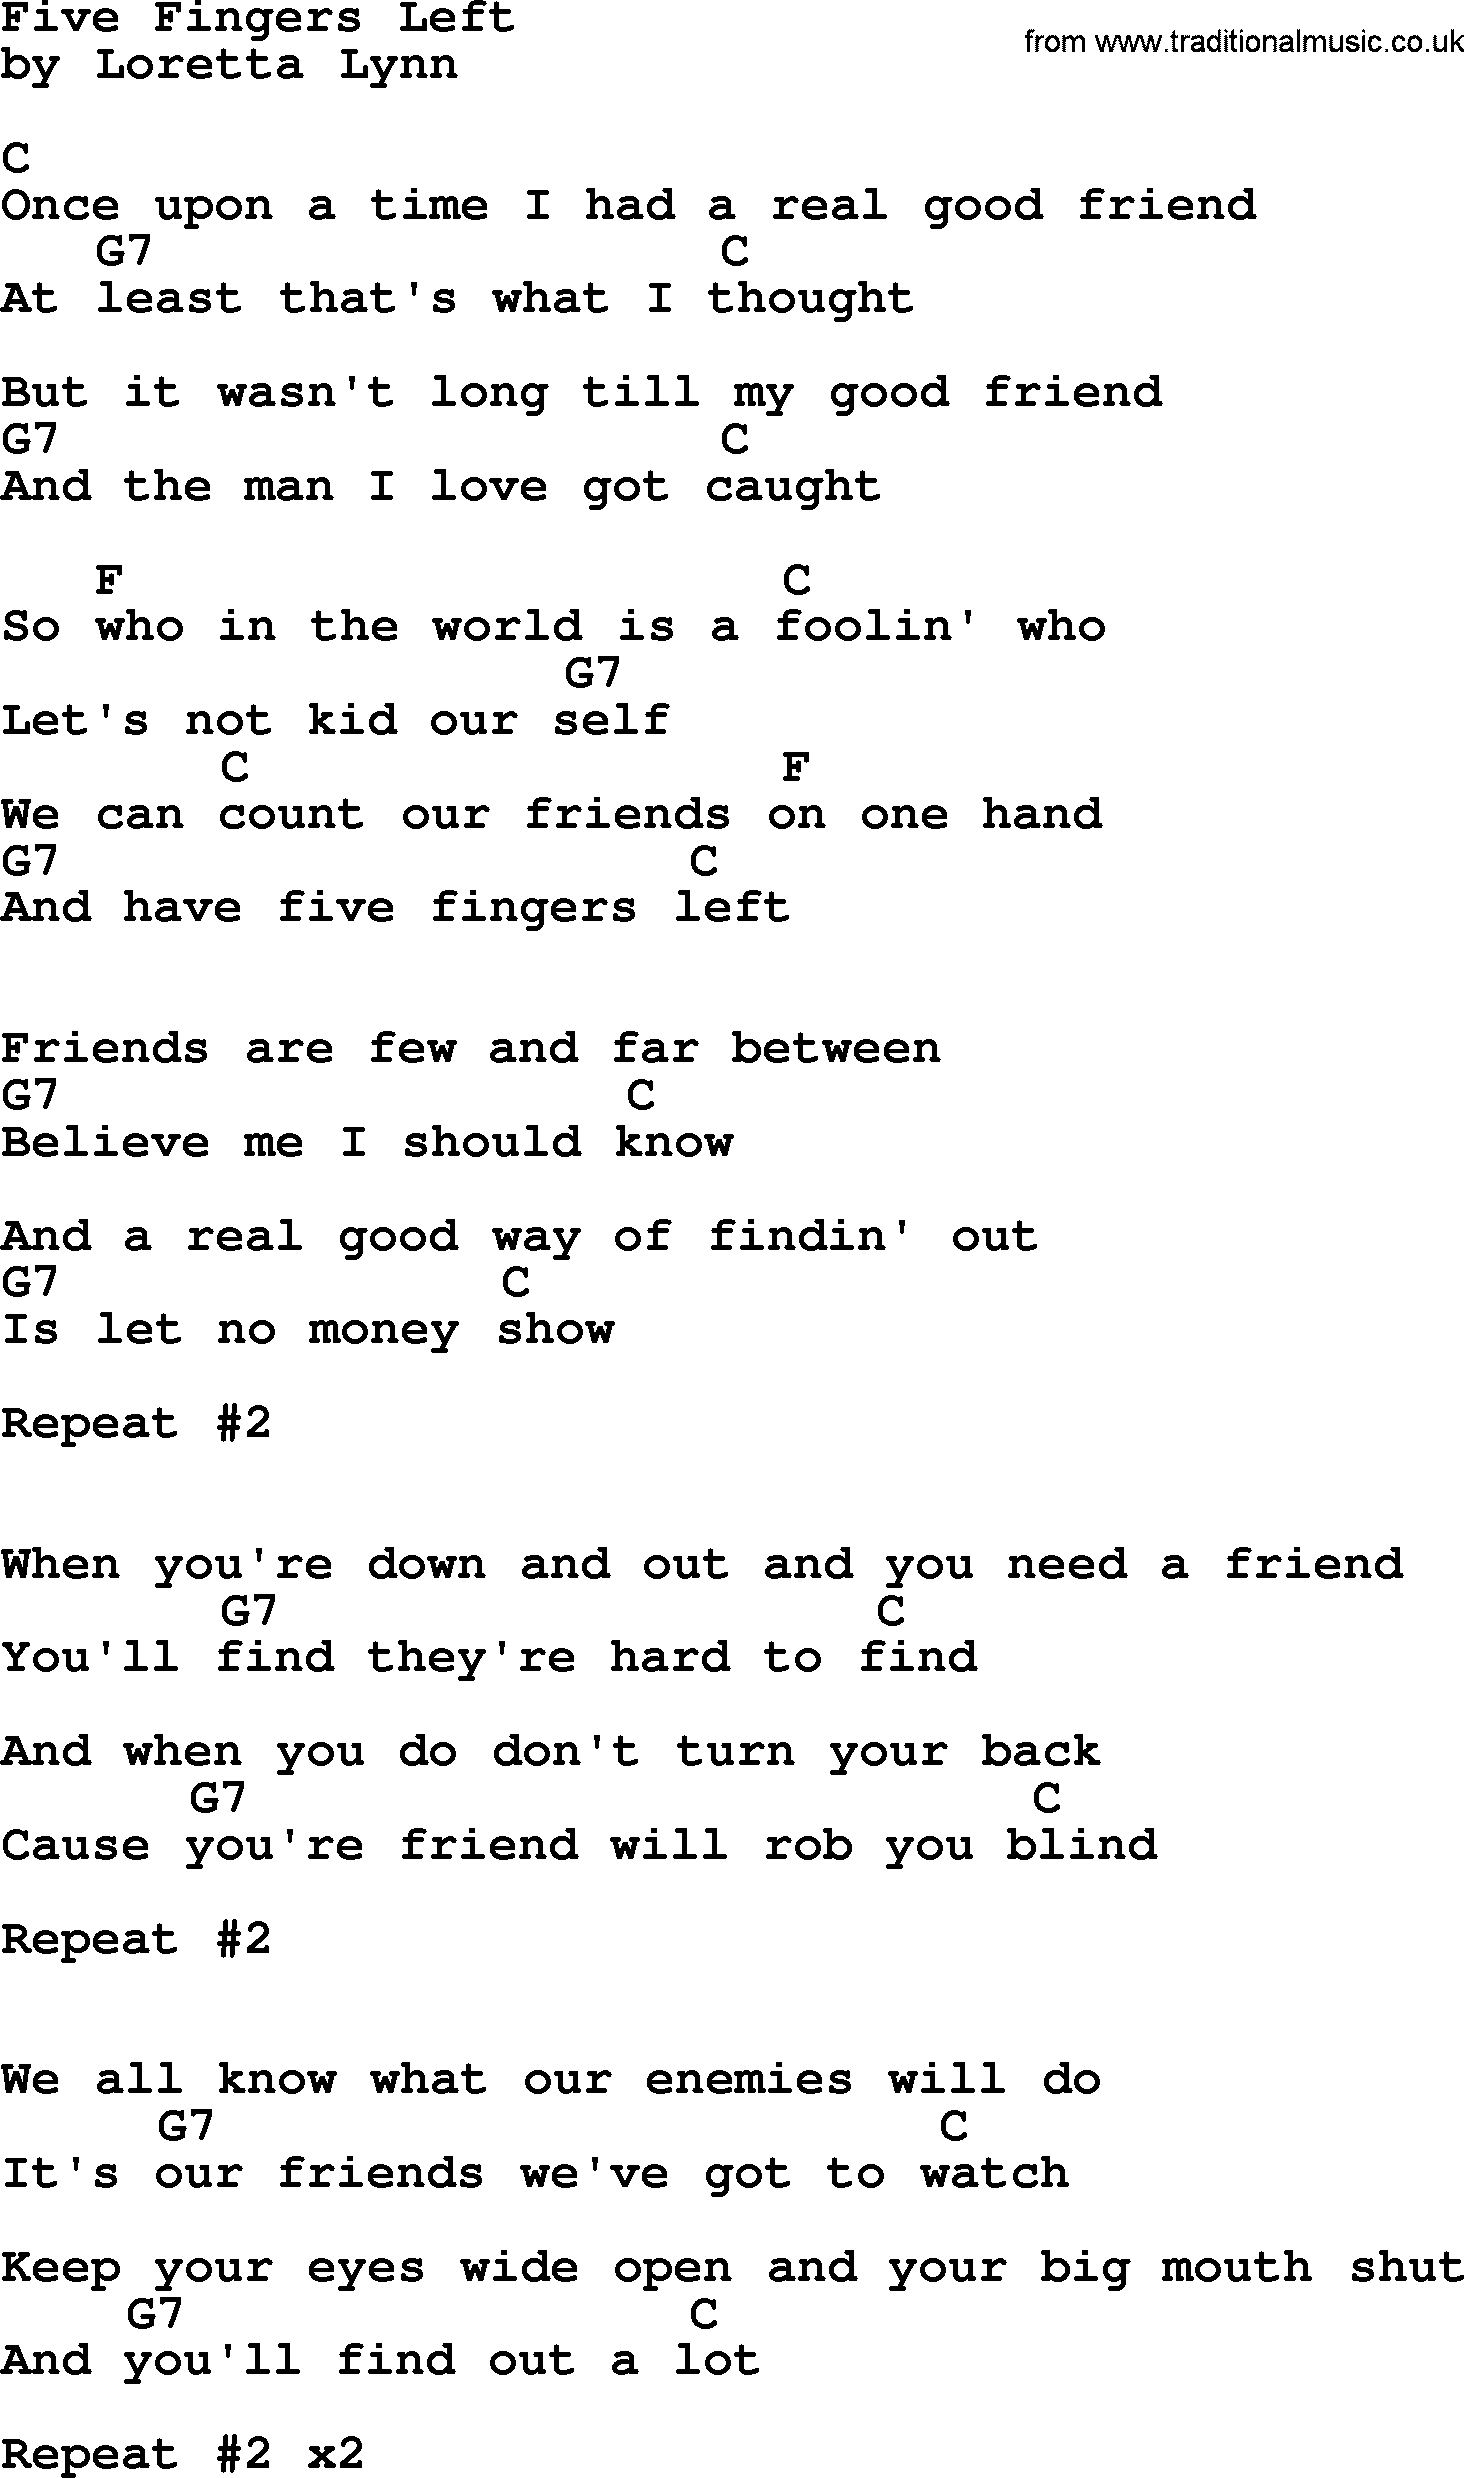 Loretta Lynn song: Five Fingers Left lyrics and chords